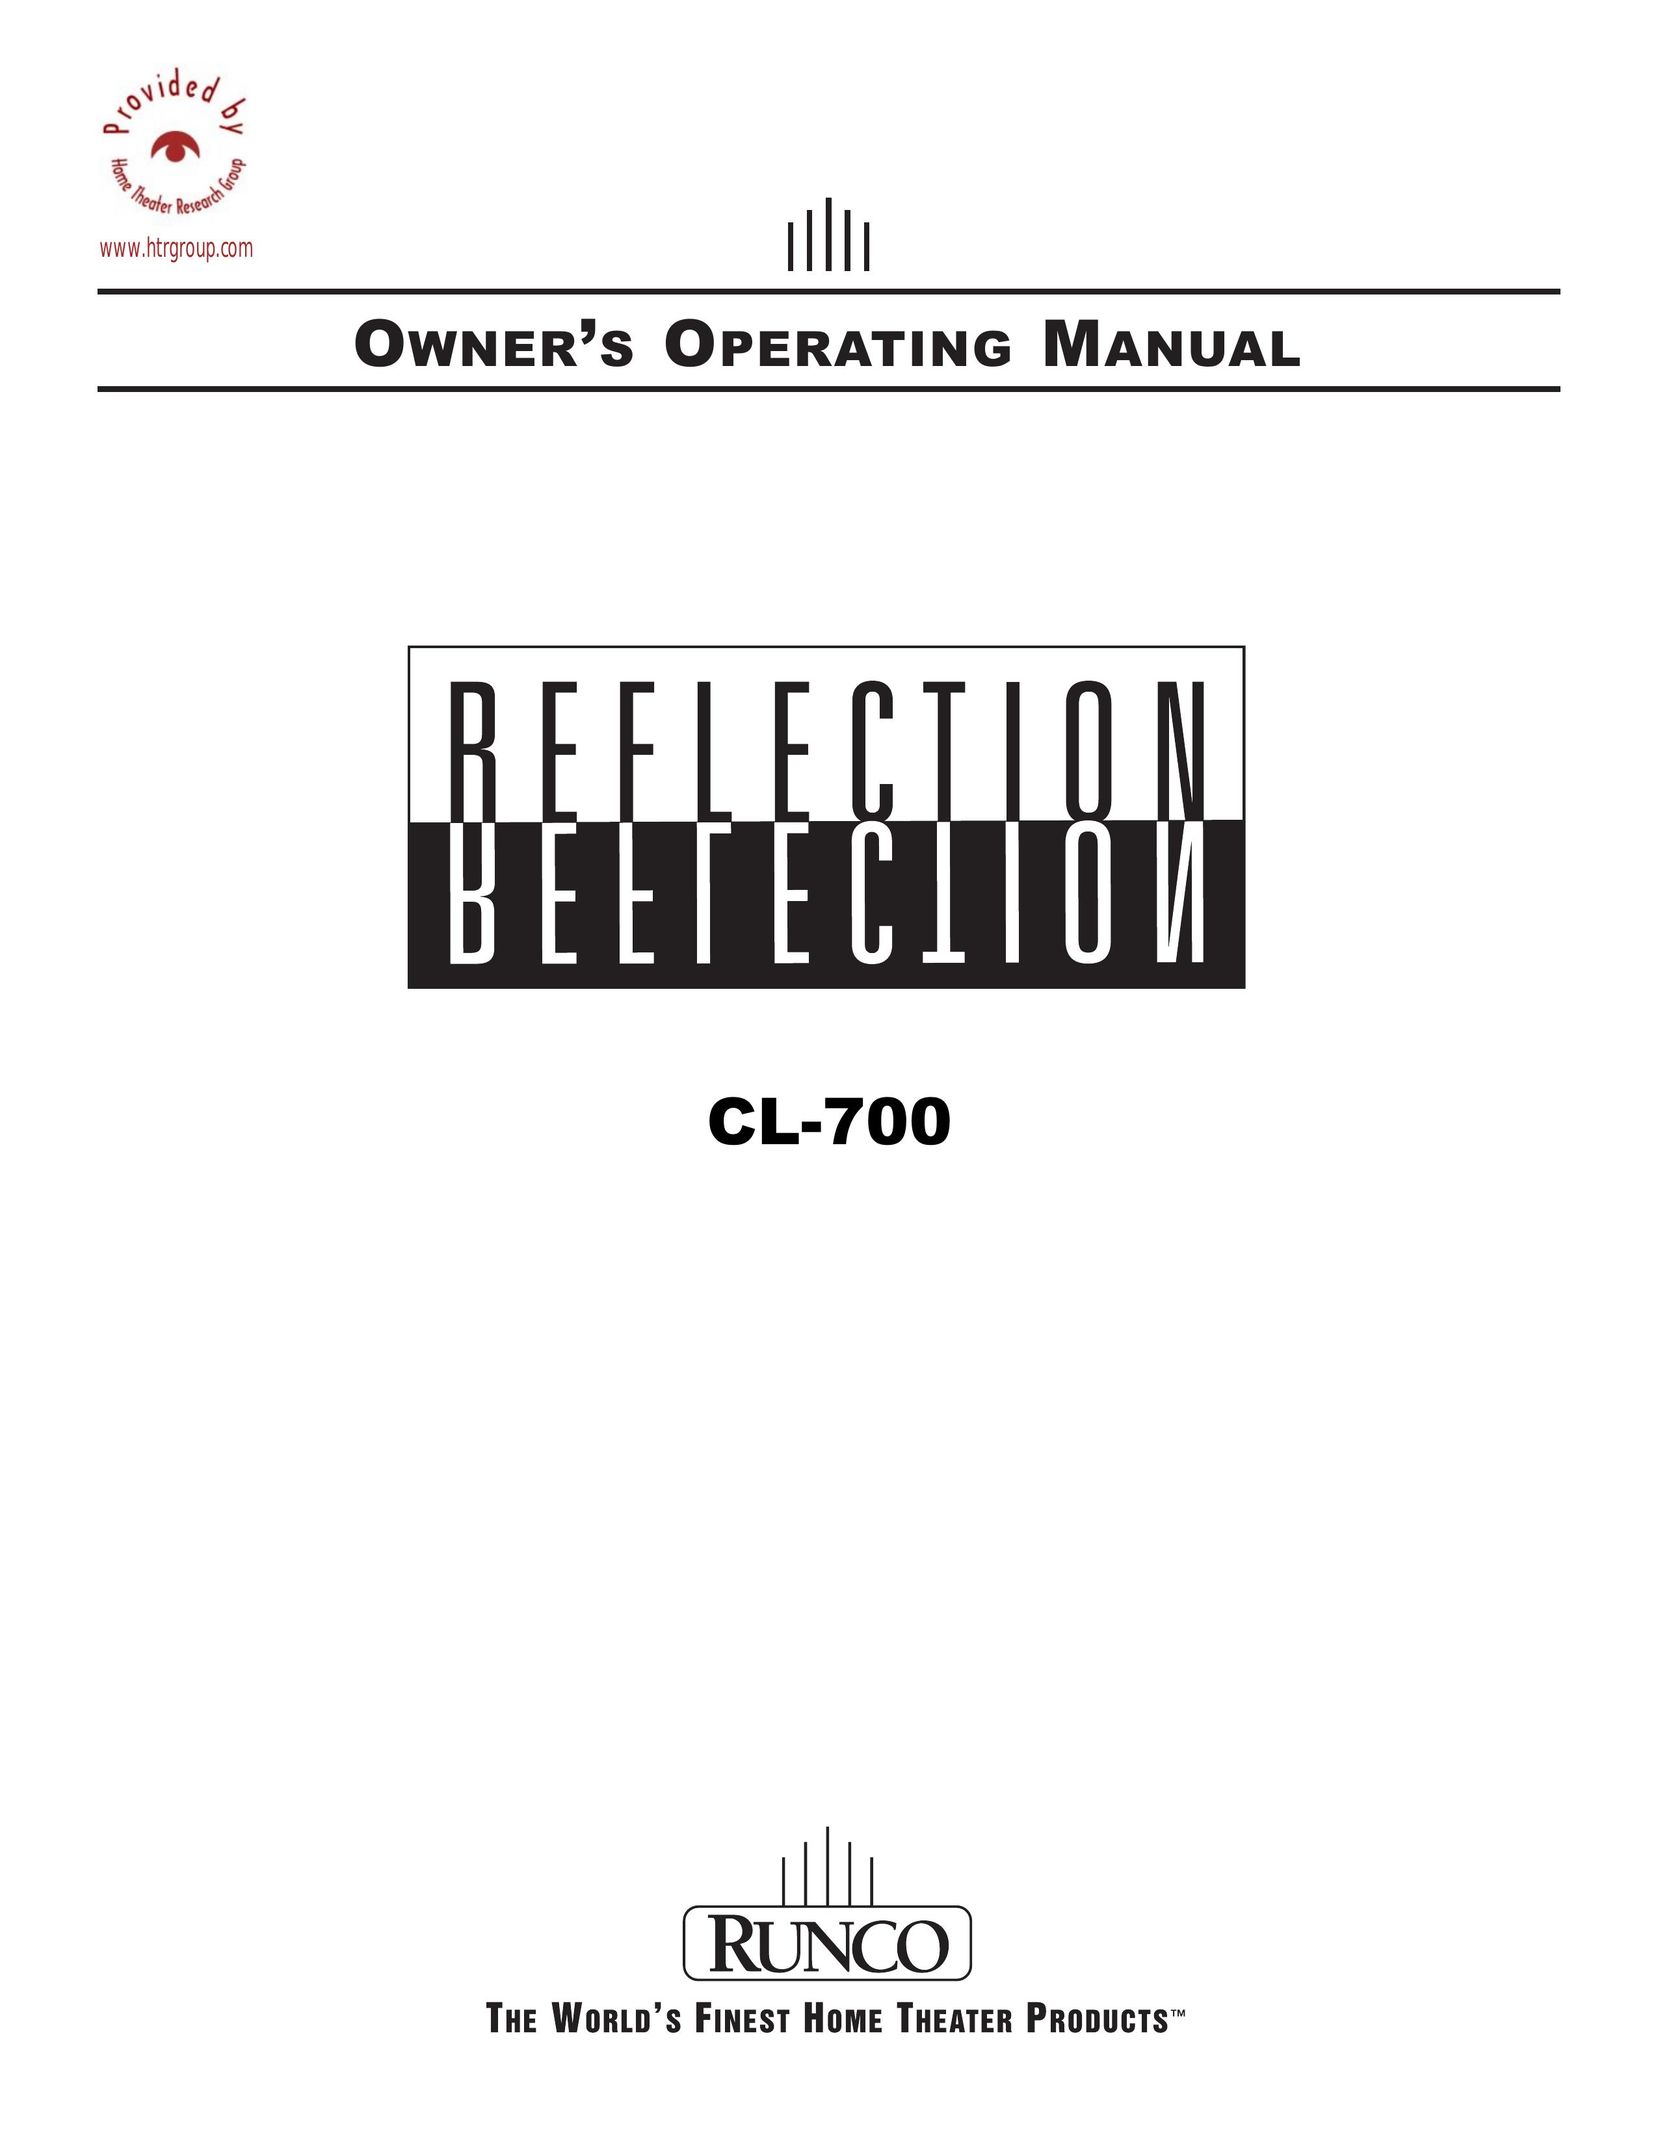 Runco CL-700 Projector User Manual